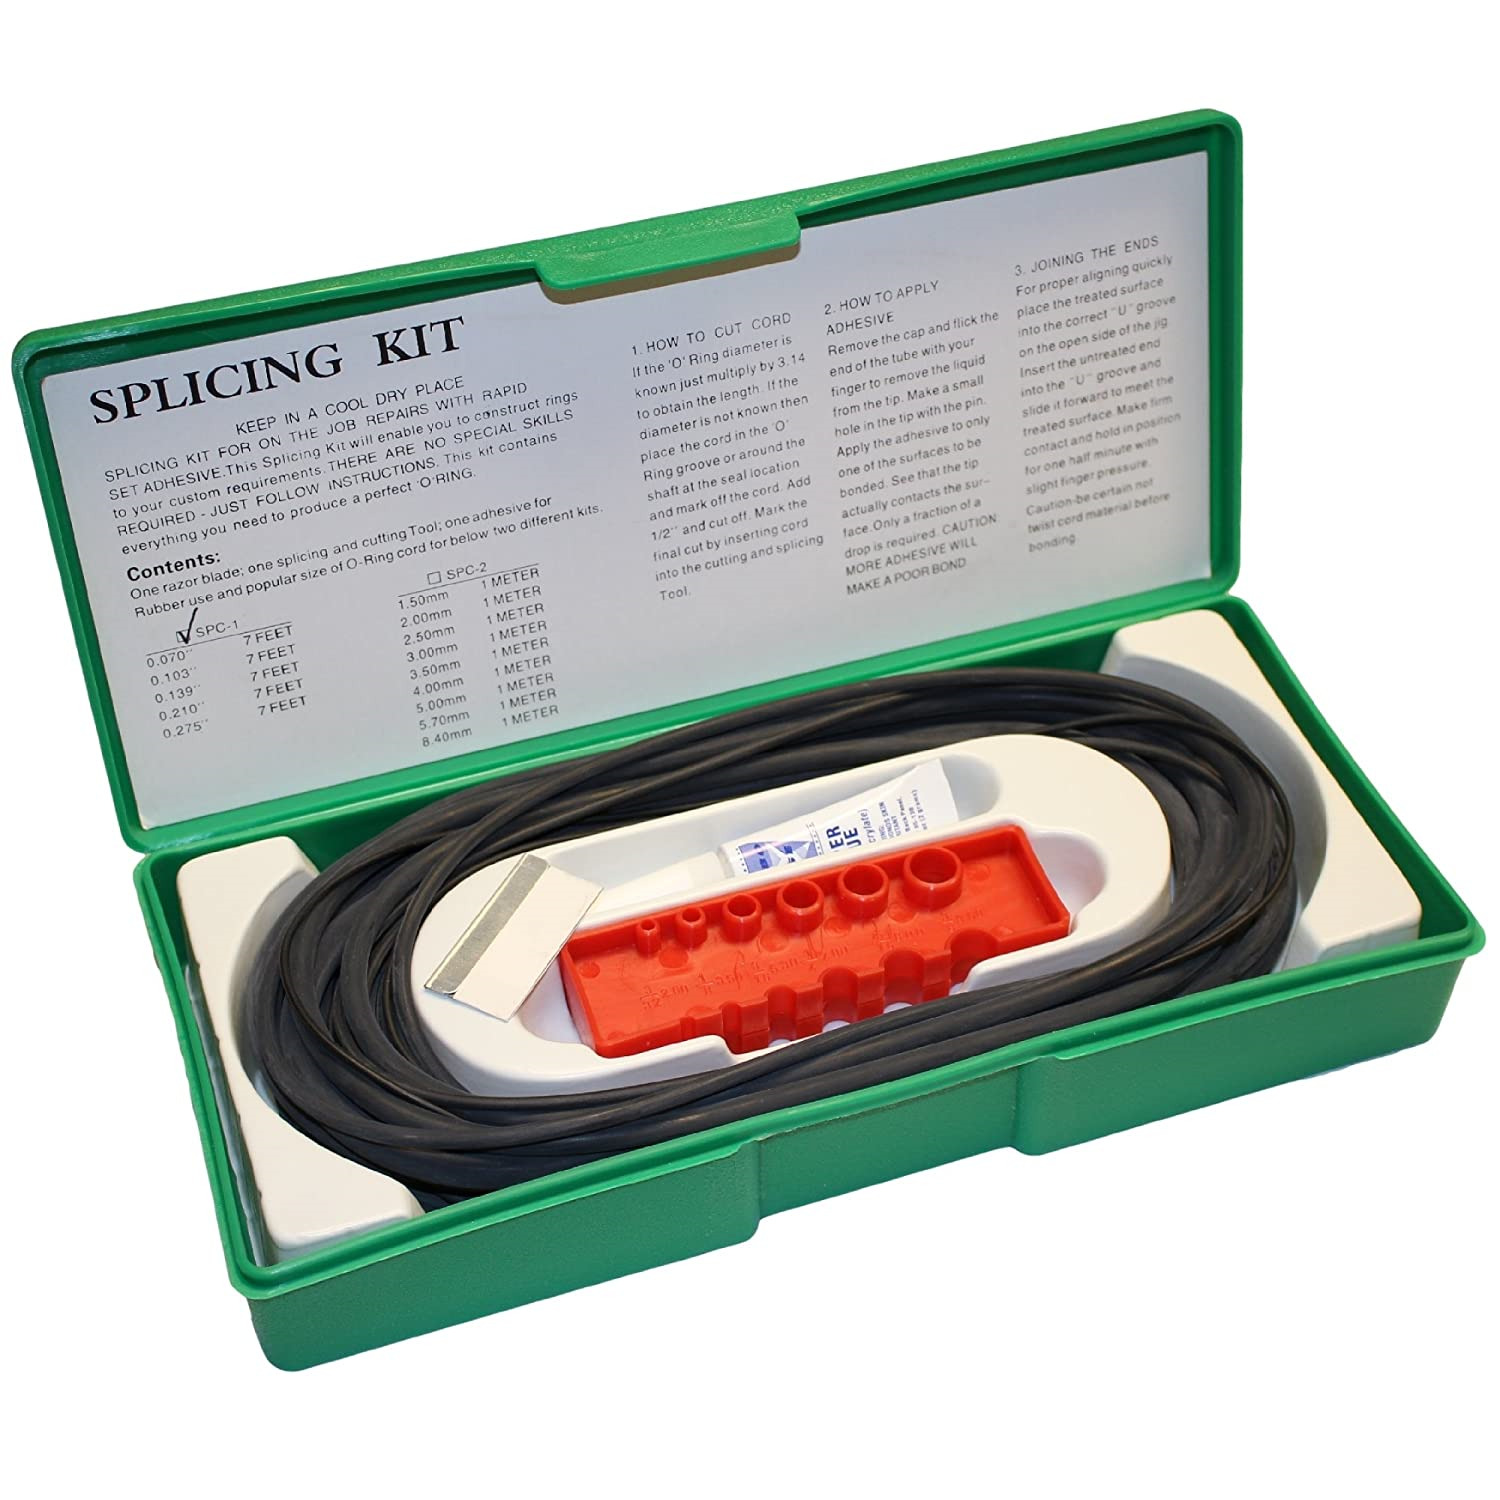 Buna-N O-Ring Splicing Kit, 70A Durometer, Black, Standard Sizes, 5 Pieces